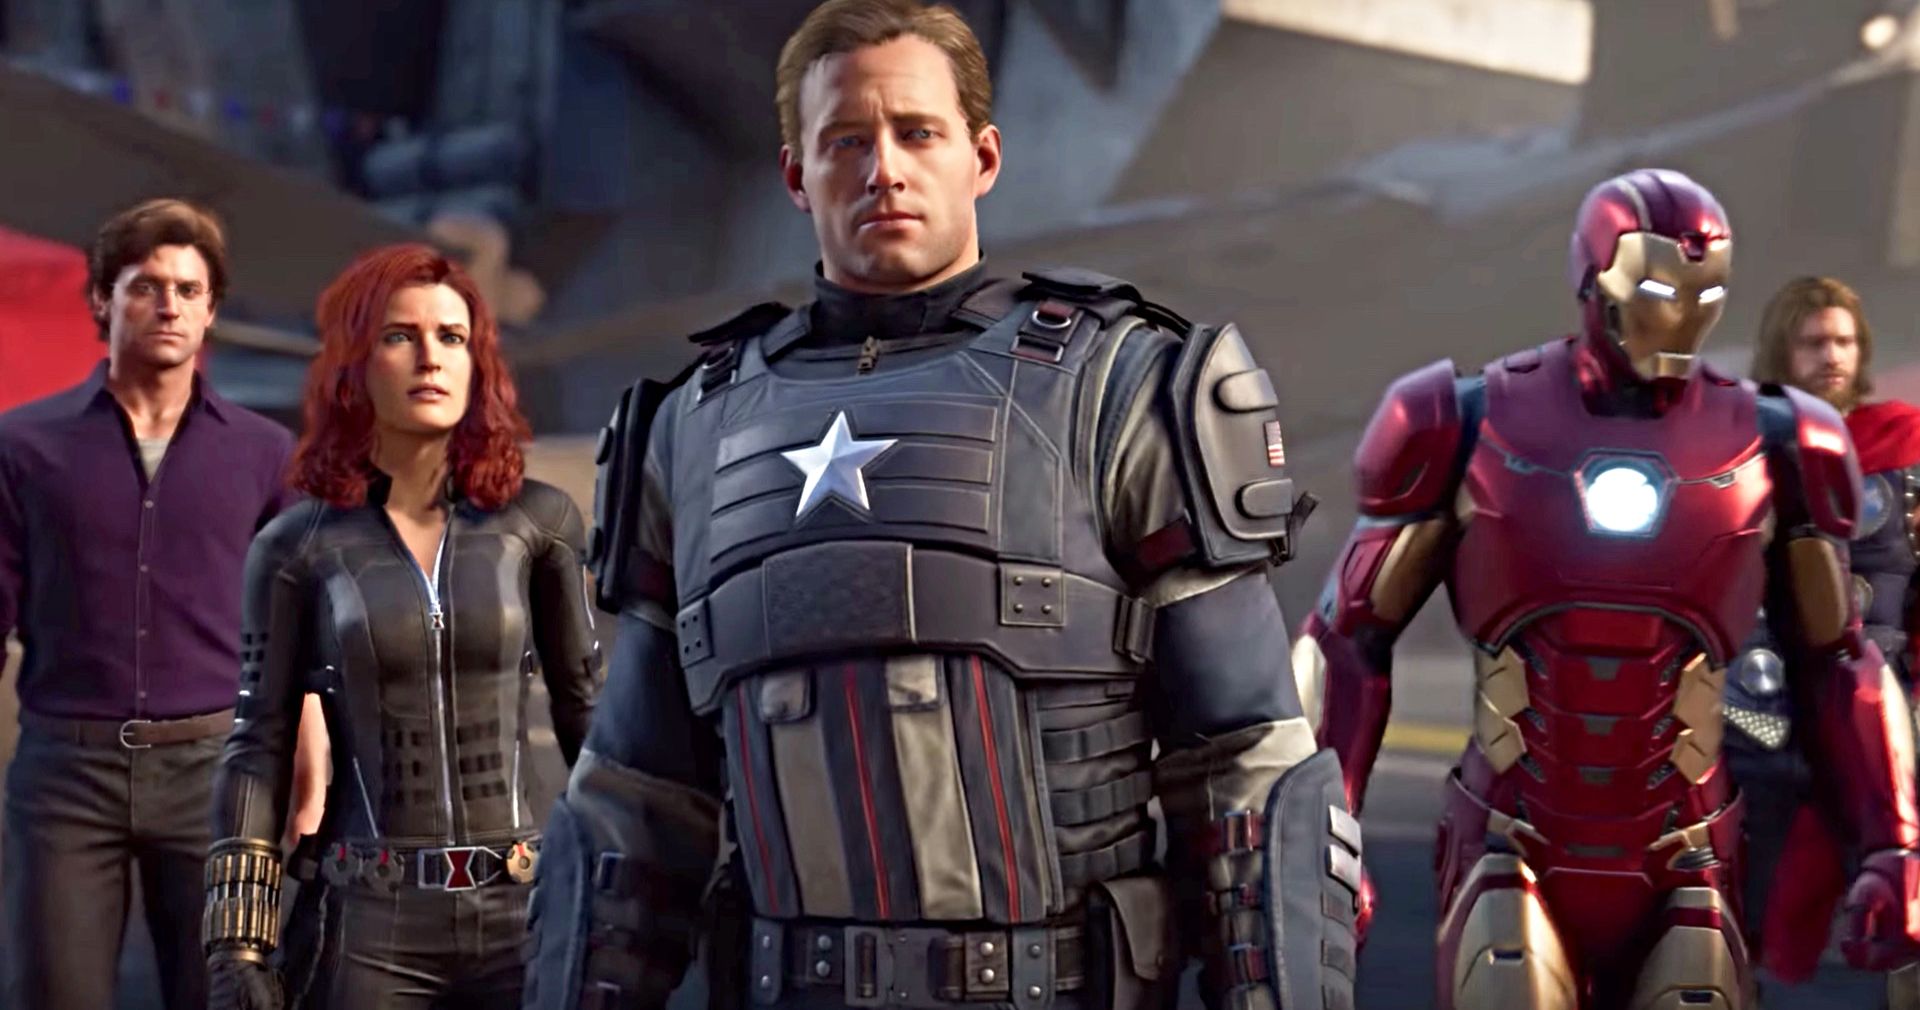 Marvel's Avengers Game Trailer Finally Arrives from Square Enix